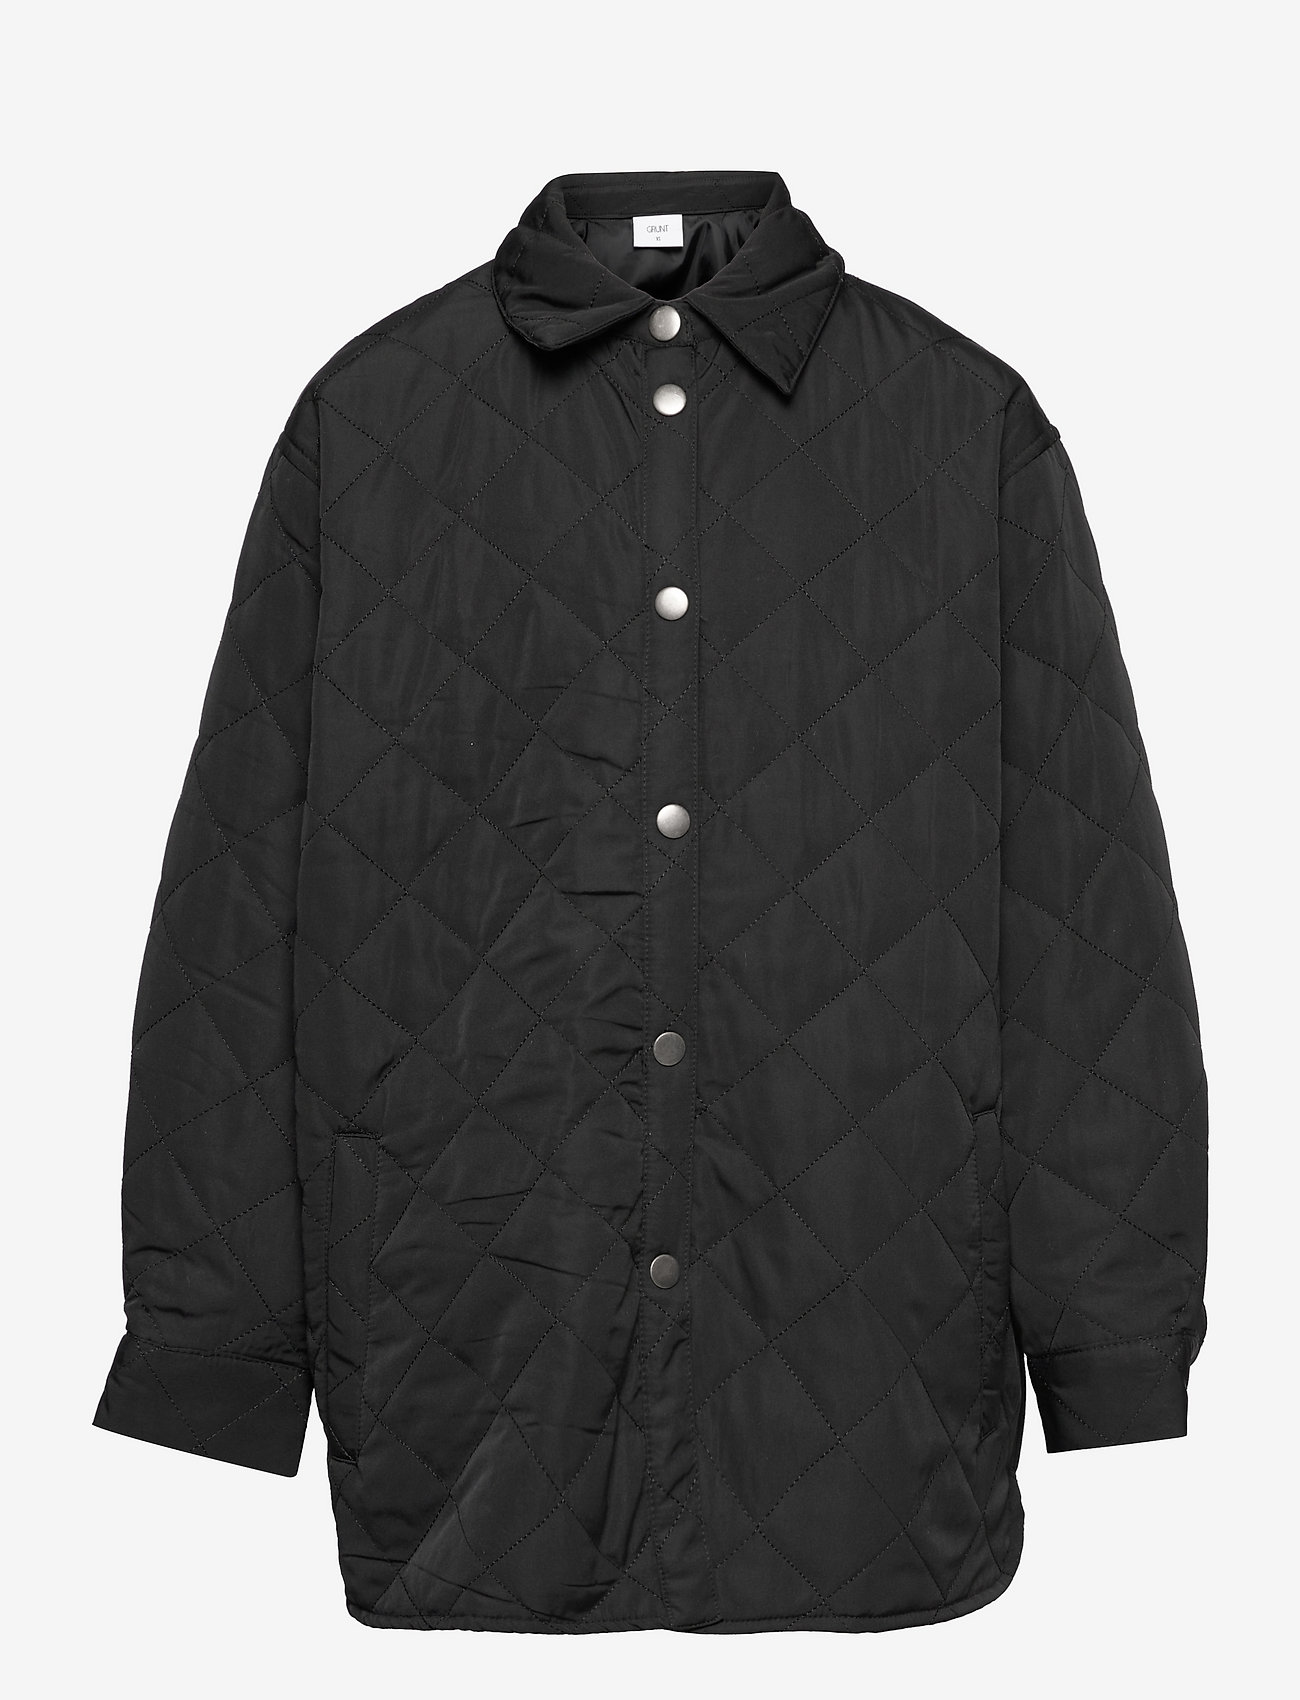 Grunt - Kate Quilt Jacket - quilted jackets - black - 0